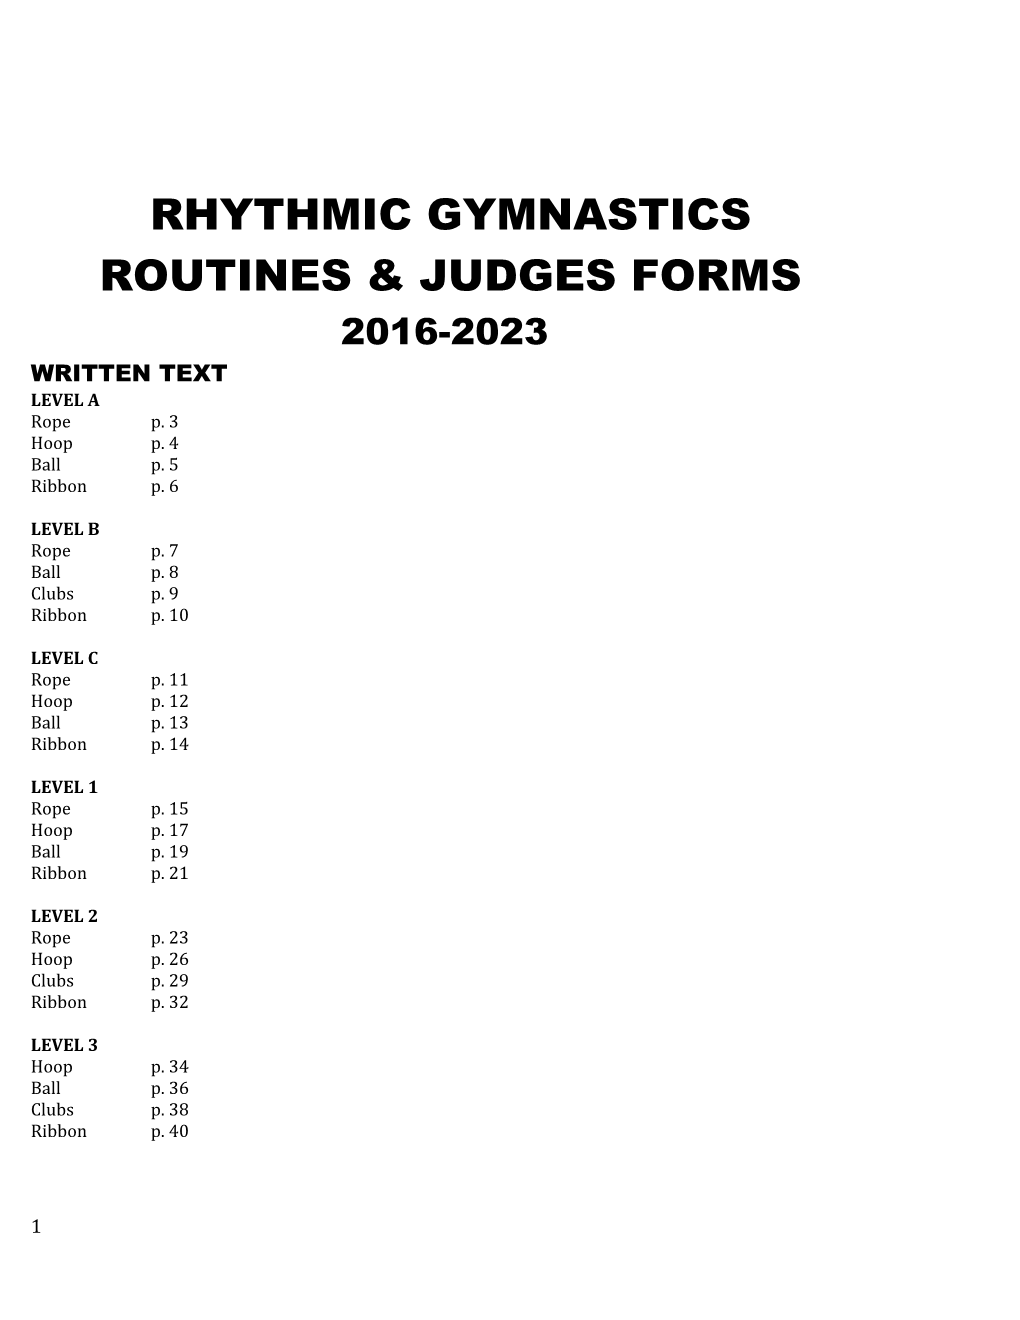 Rhythmic Gymnastics Routines & Judges Forms